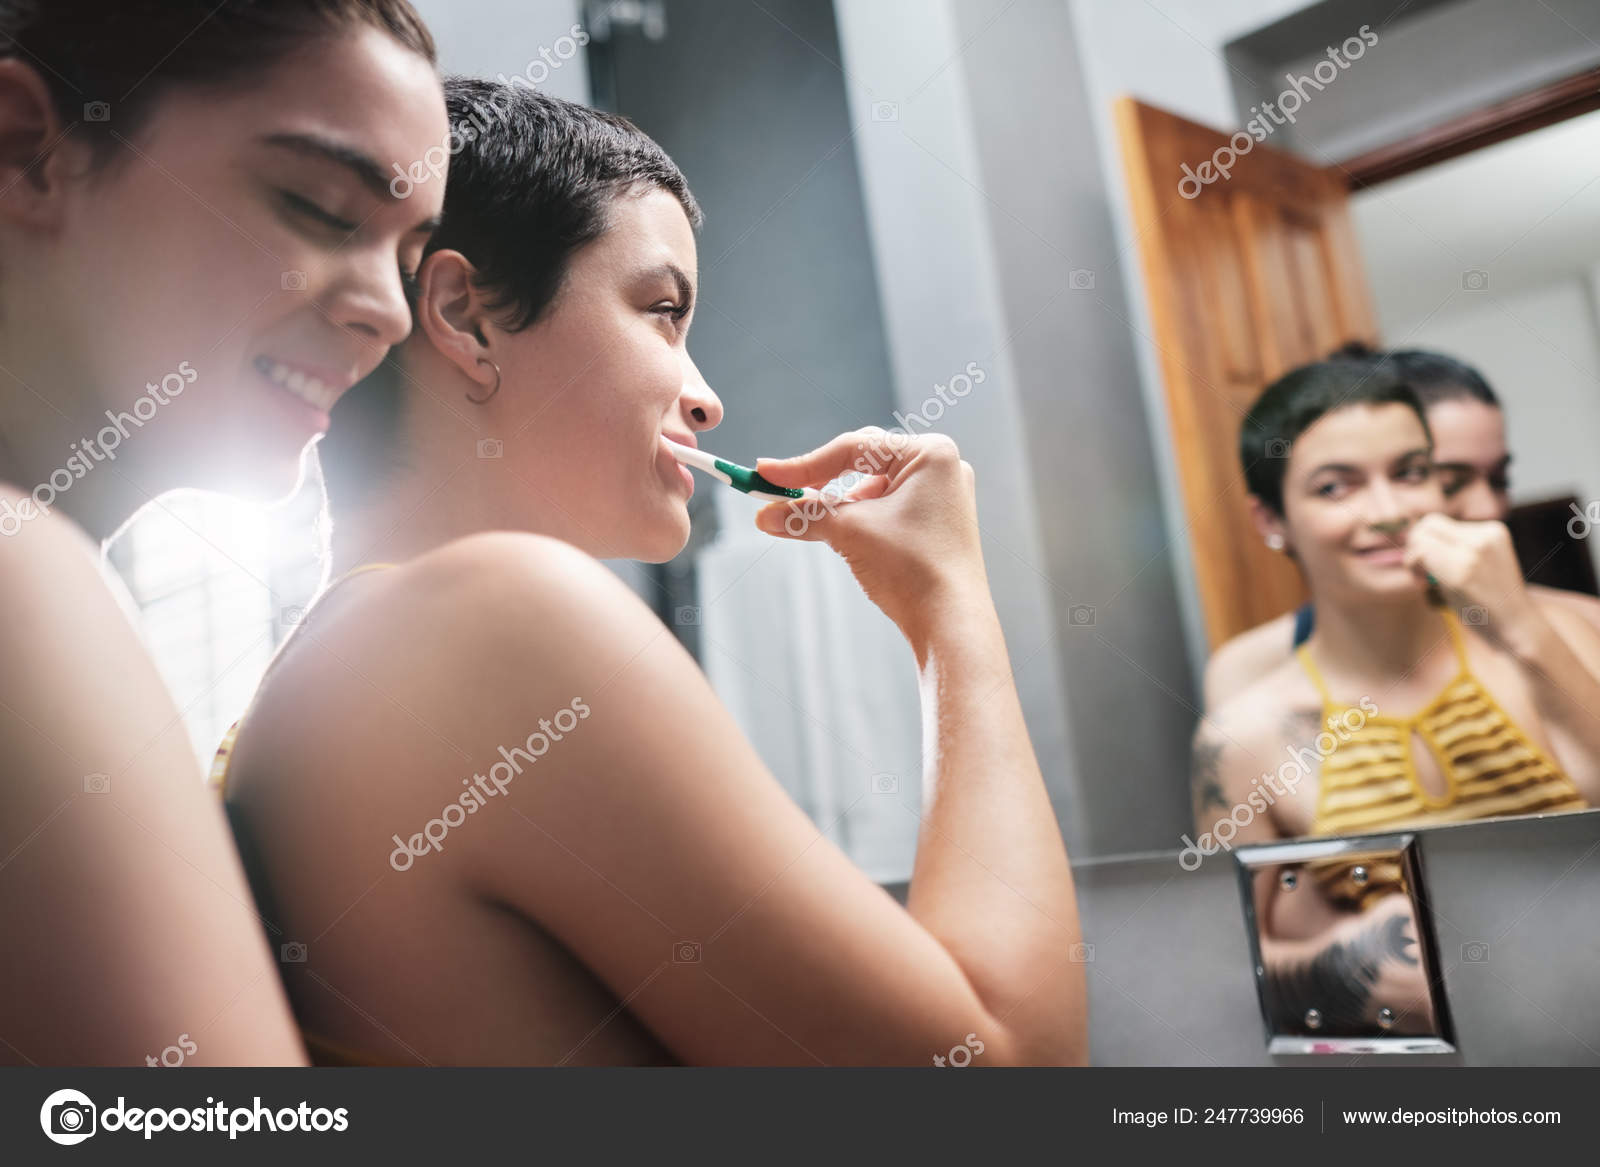 lesbian girls in shower free pics